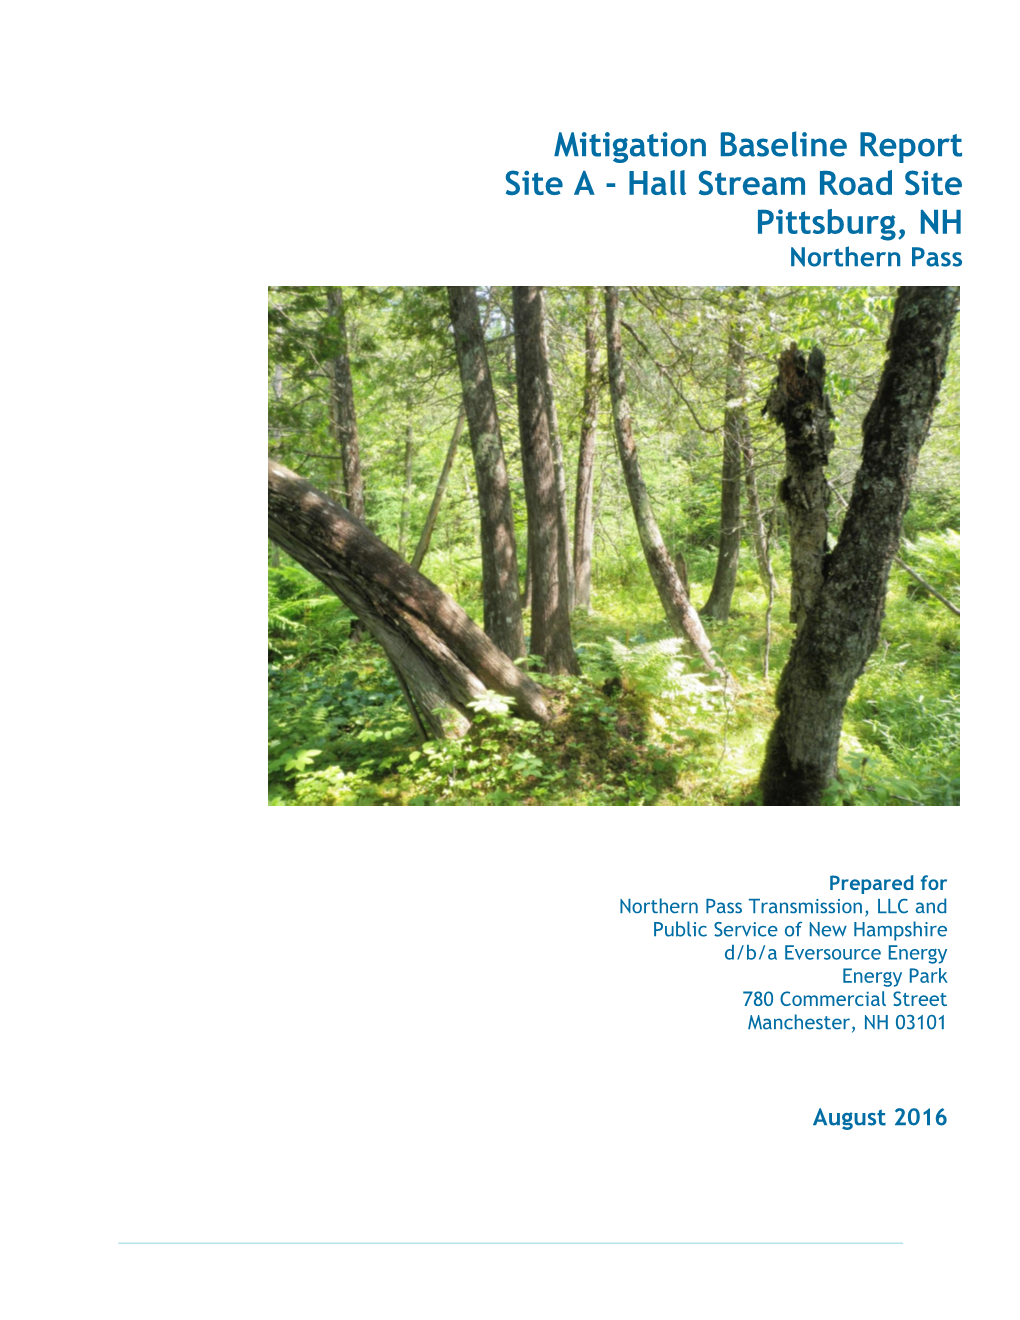 Hall Stream Road Baseline Report